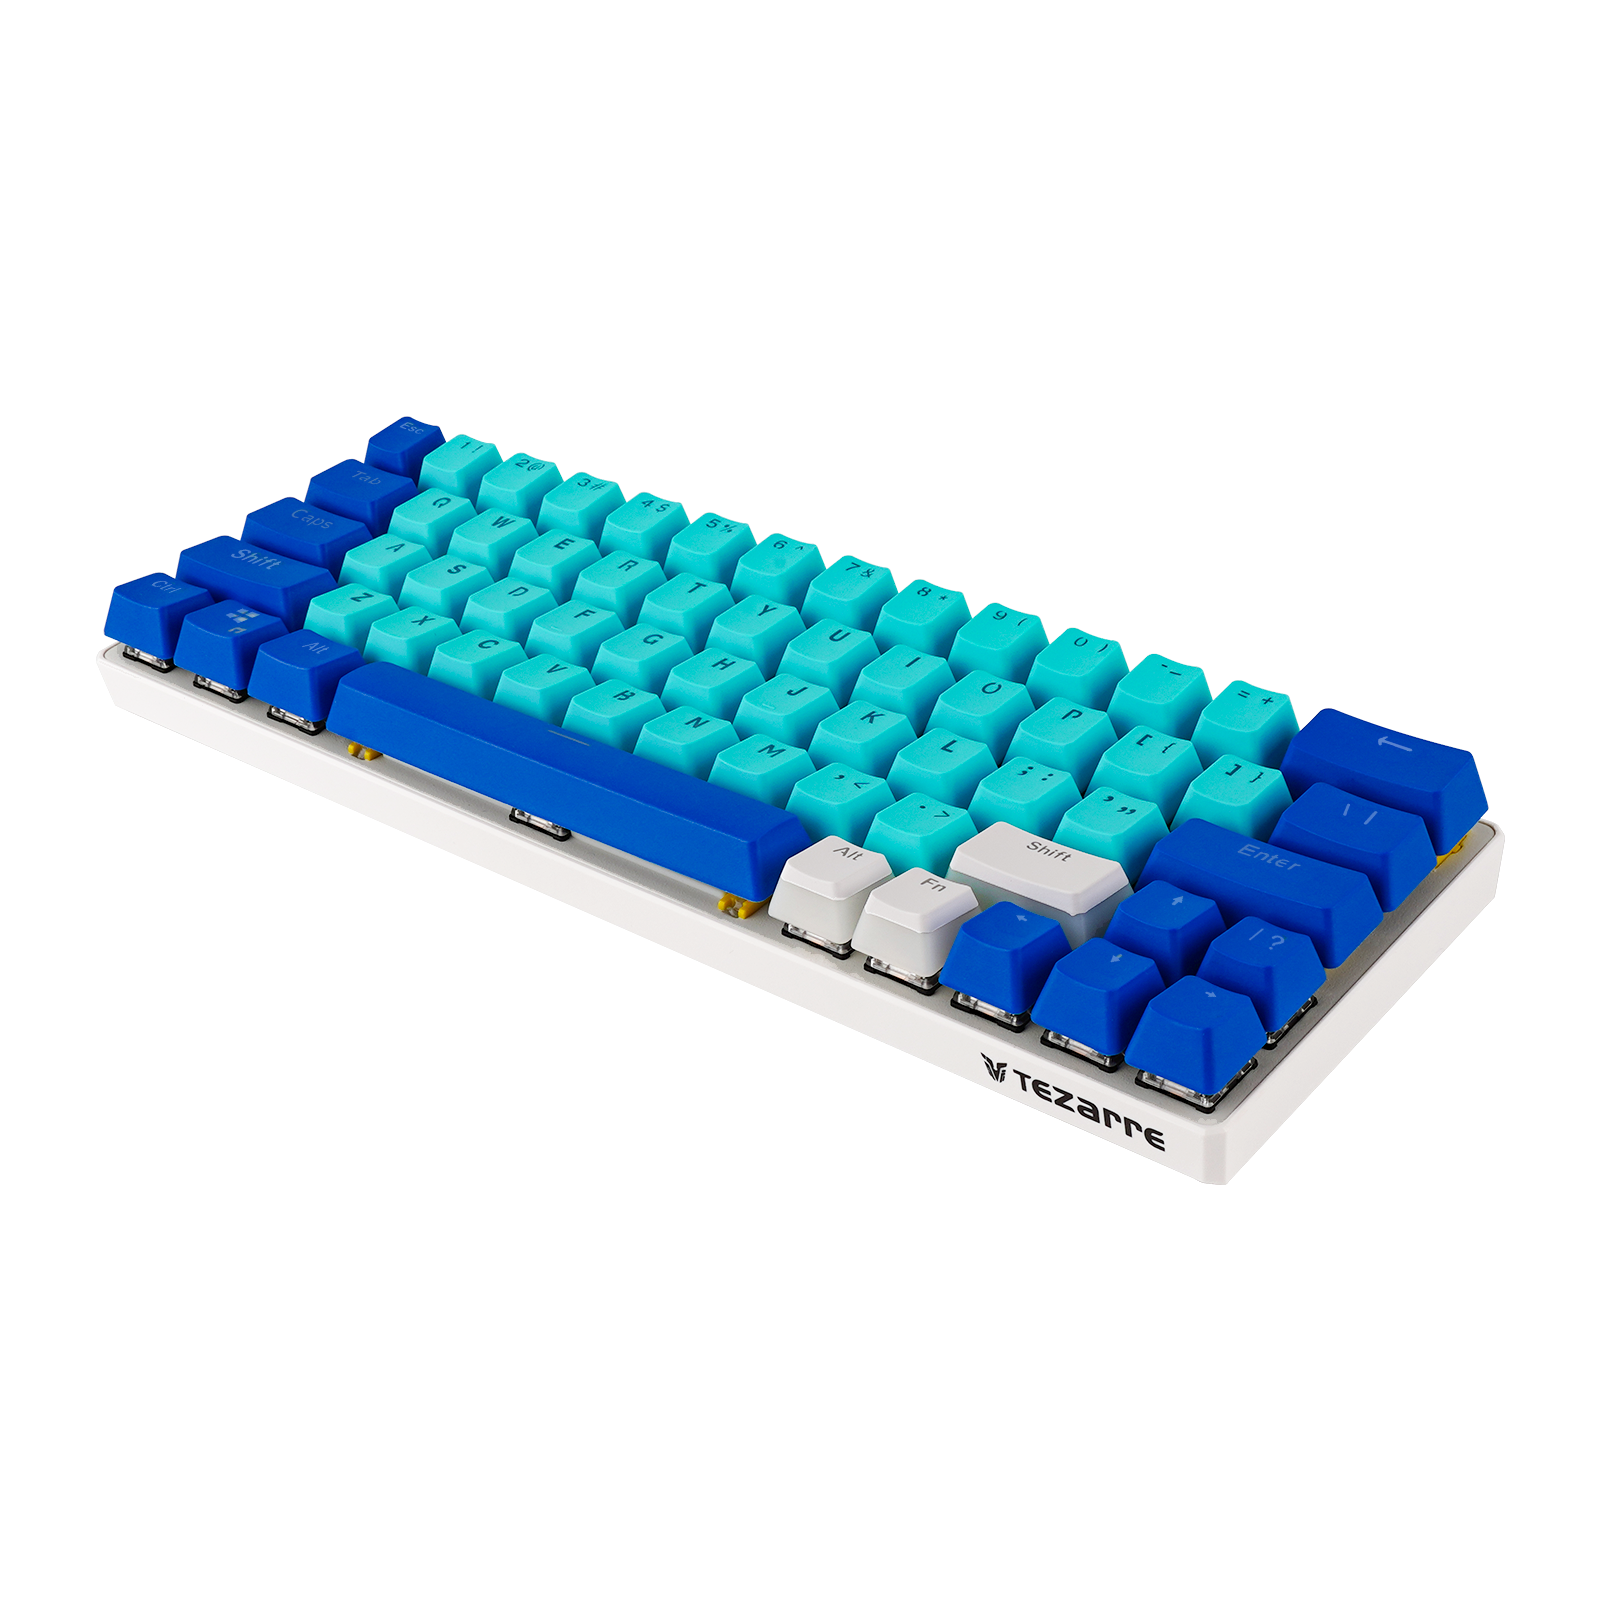 Ocean TK63 - Custom 60% Keyboard